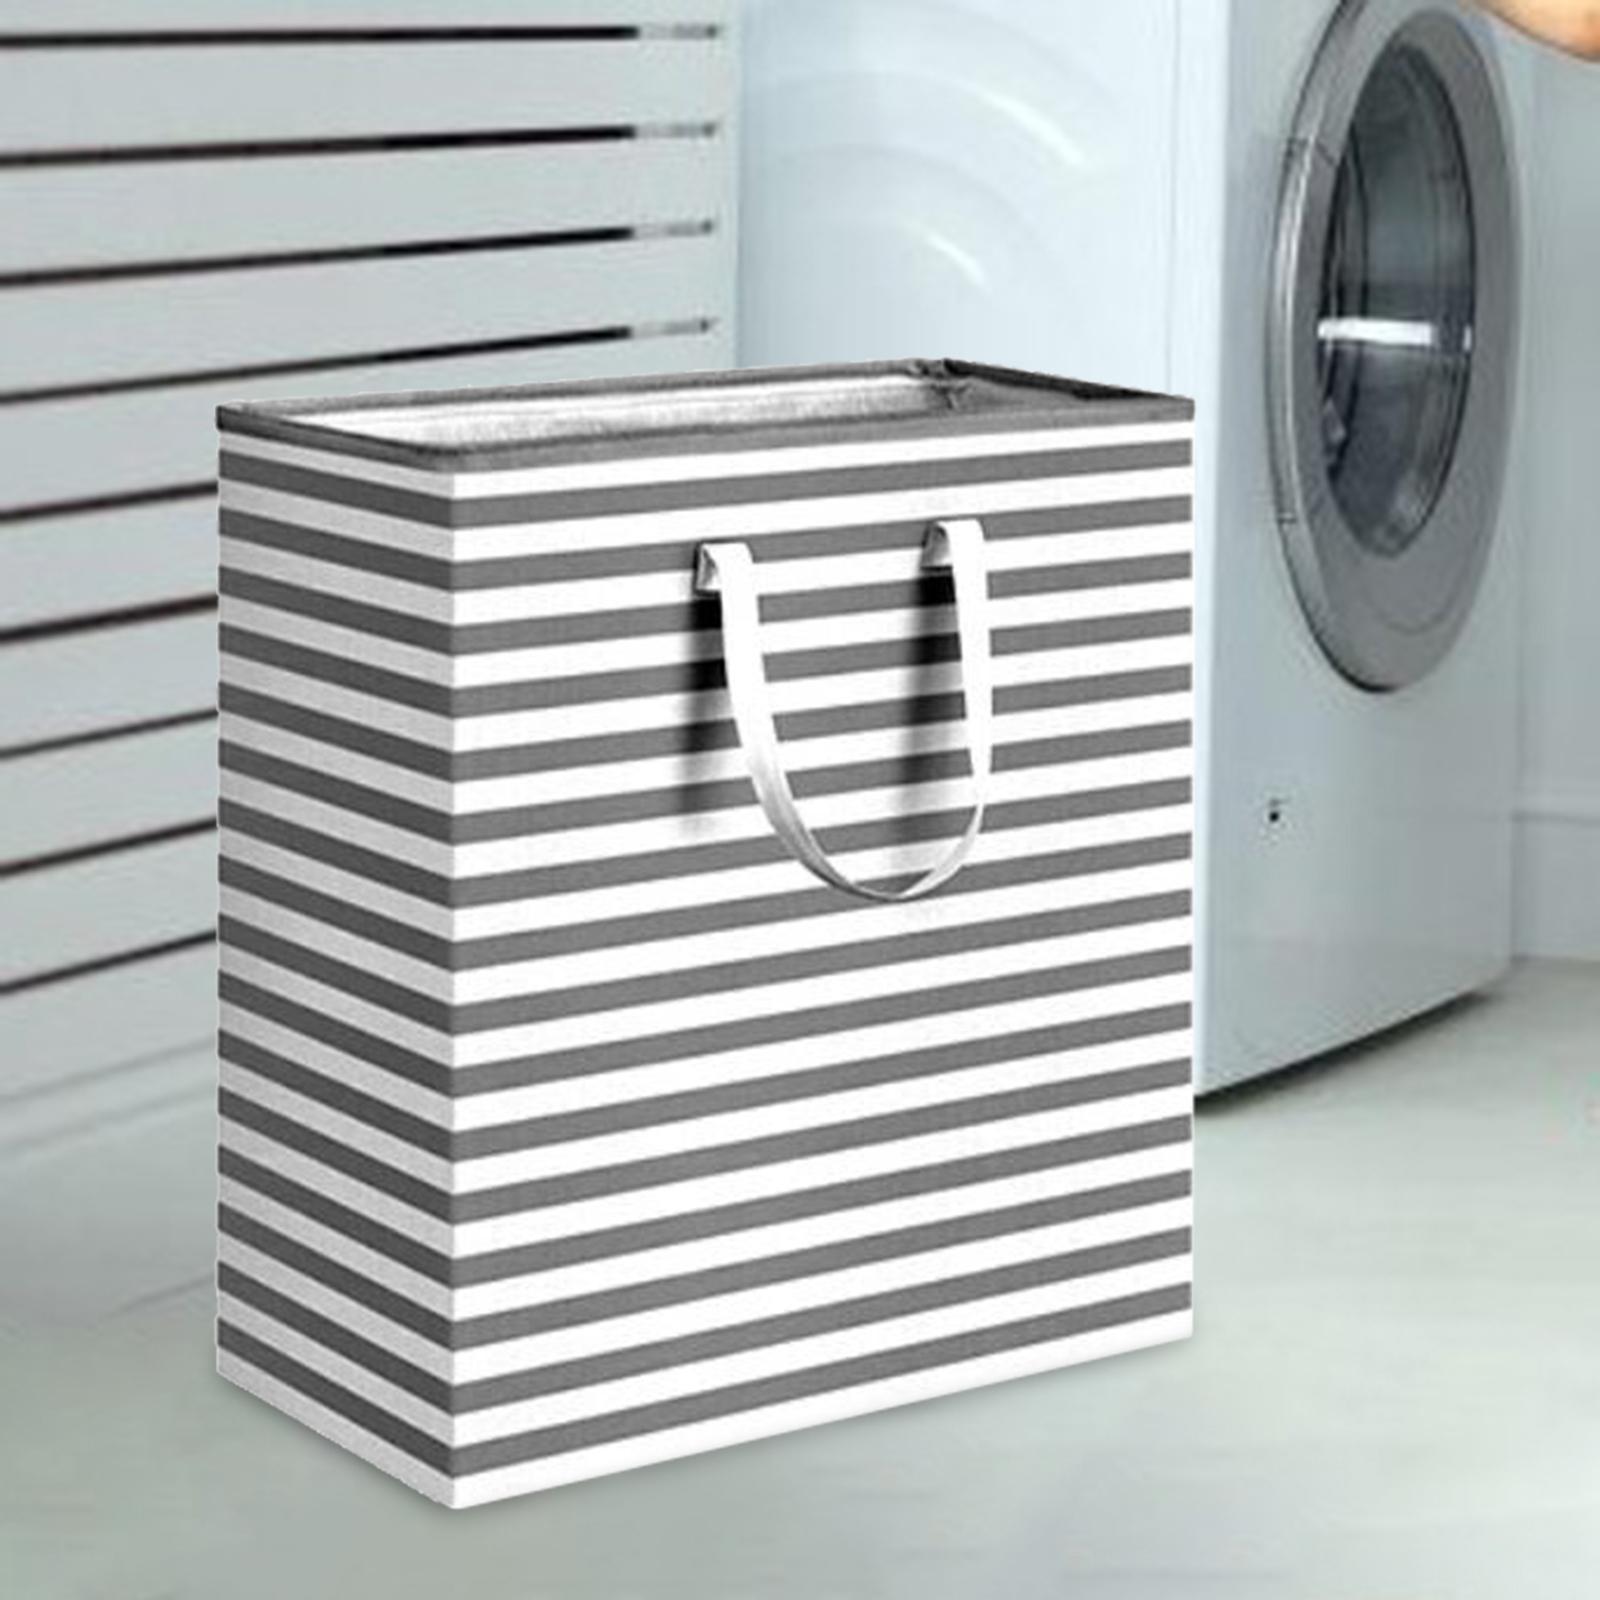 Clothes Hamper Storage Basket Folding Organizer for Pillows Handbag Toiletry